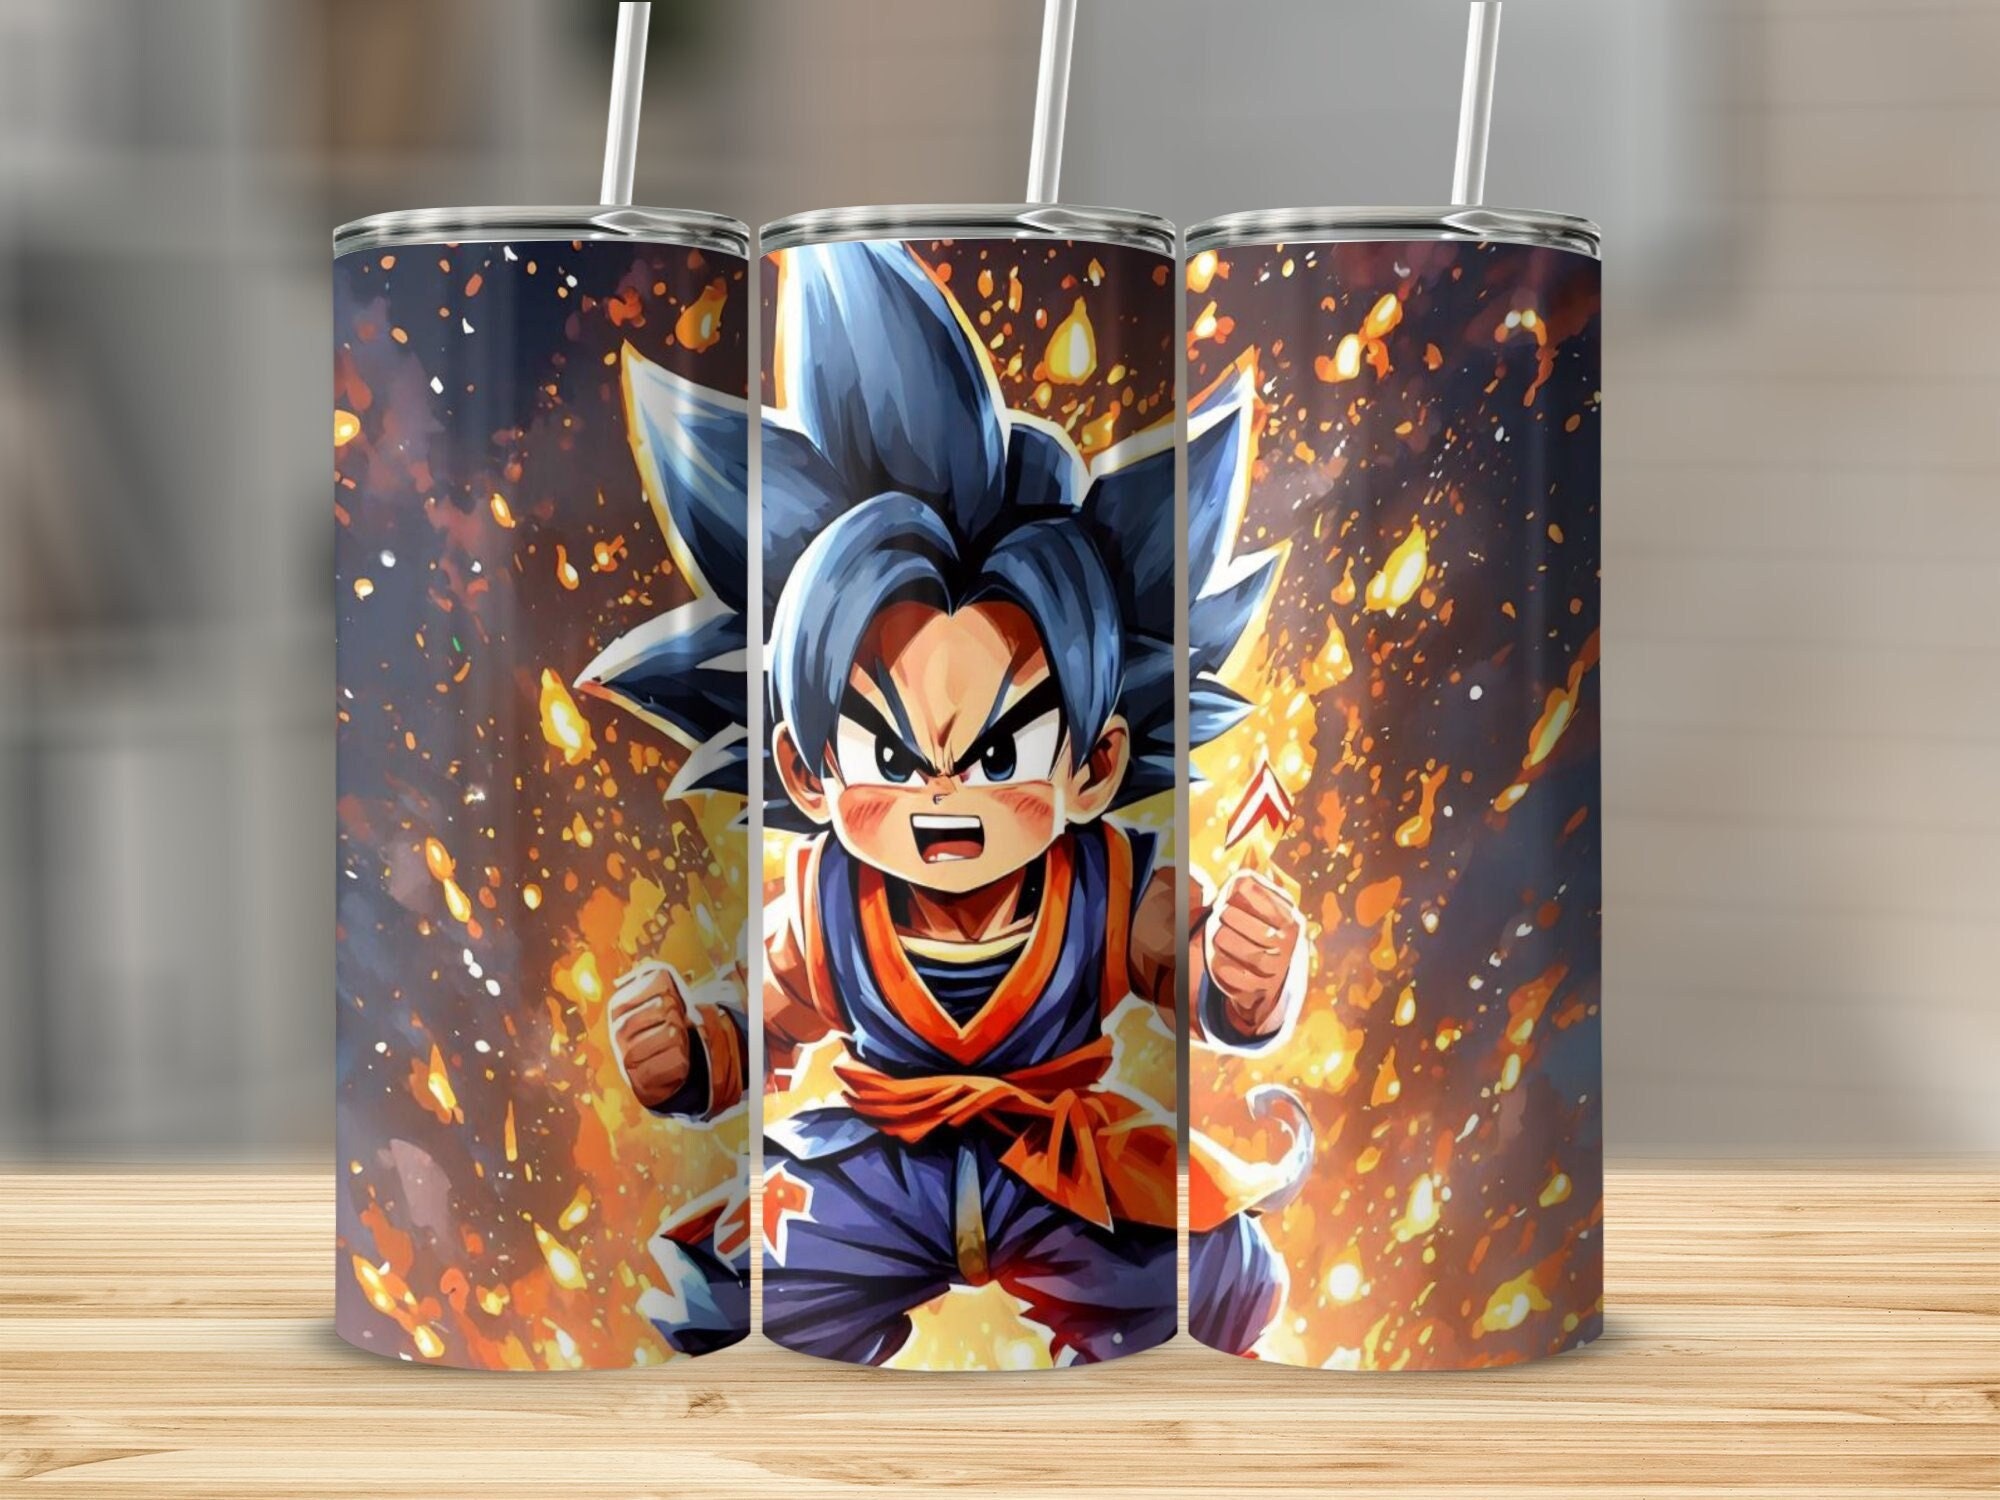 Dragon Ball Z Goku Insulated School Lunch Bag Gohan Vegeta